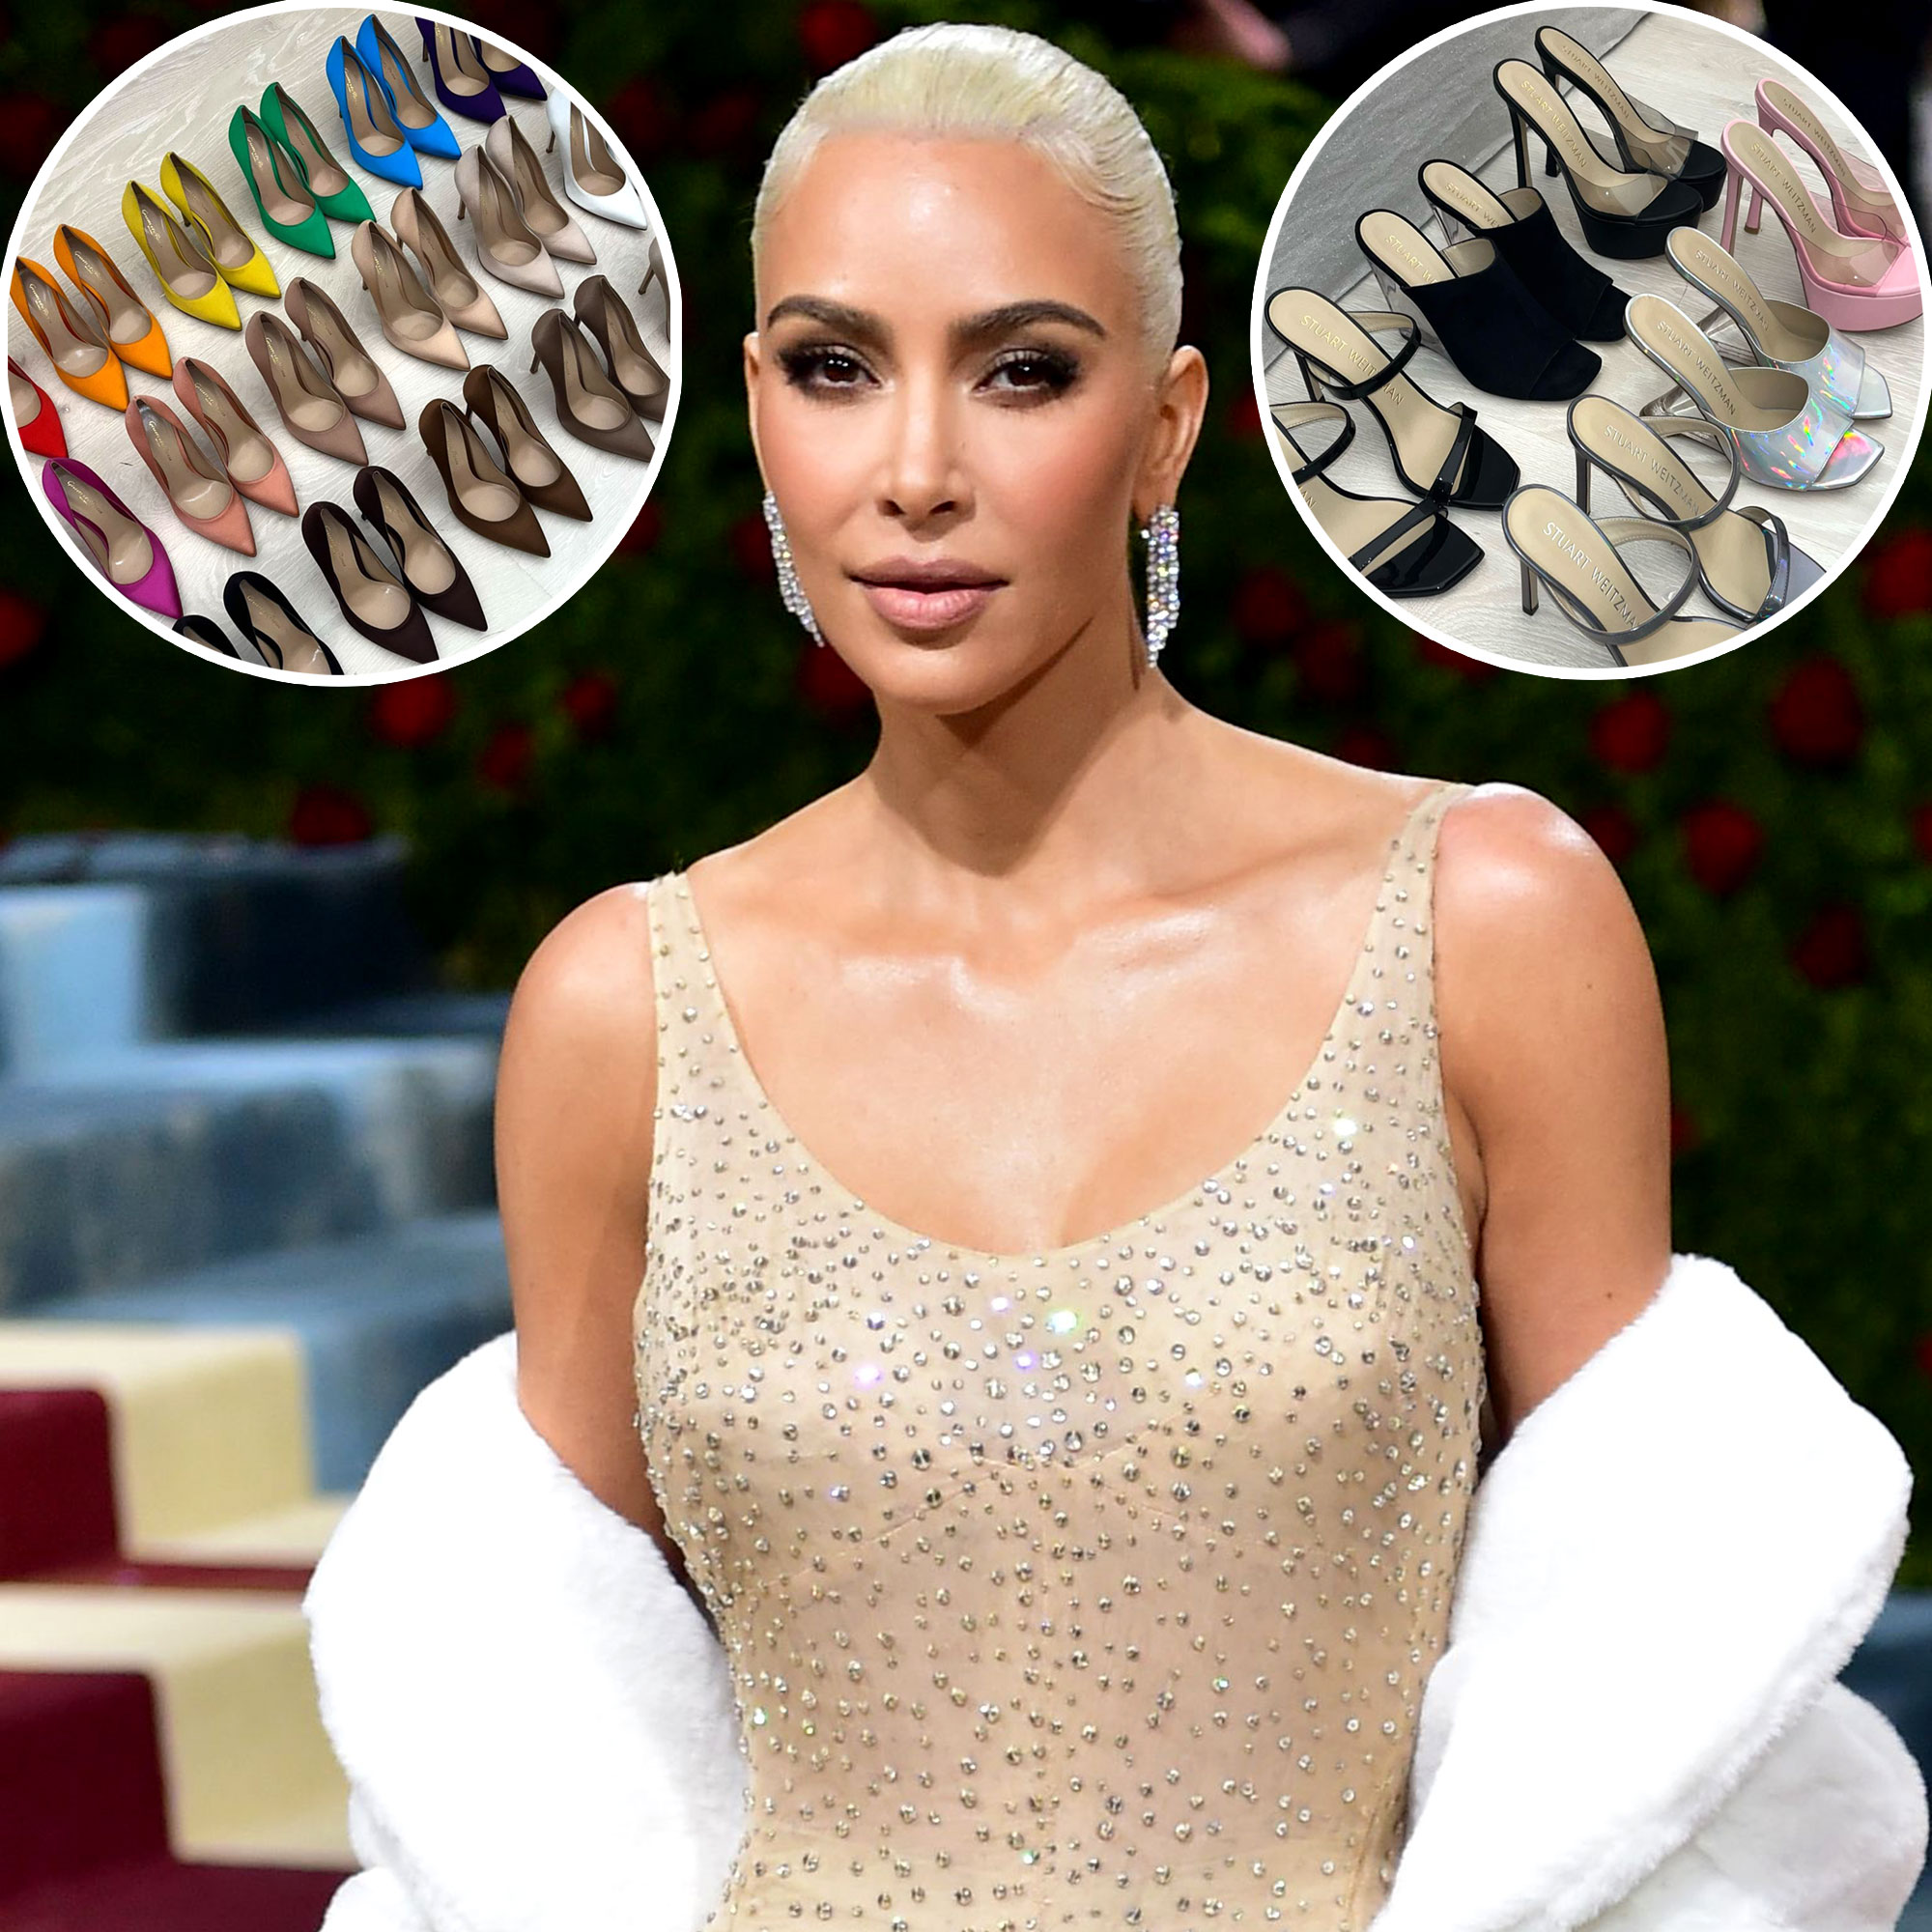 Kim Kardashian's full collection of Judith Leiber bags